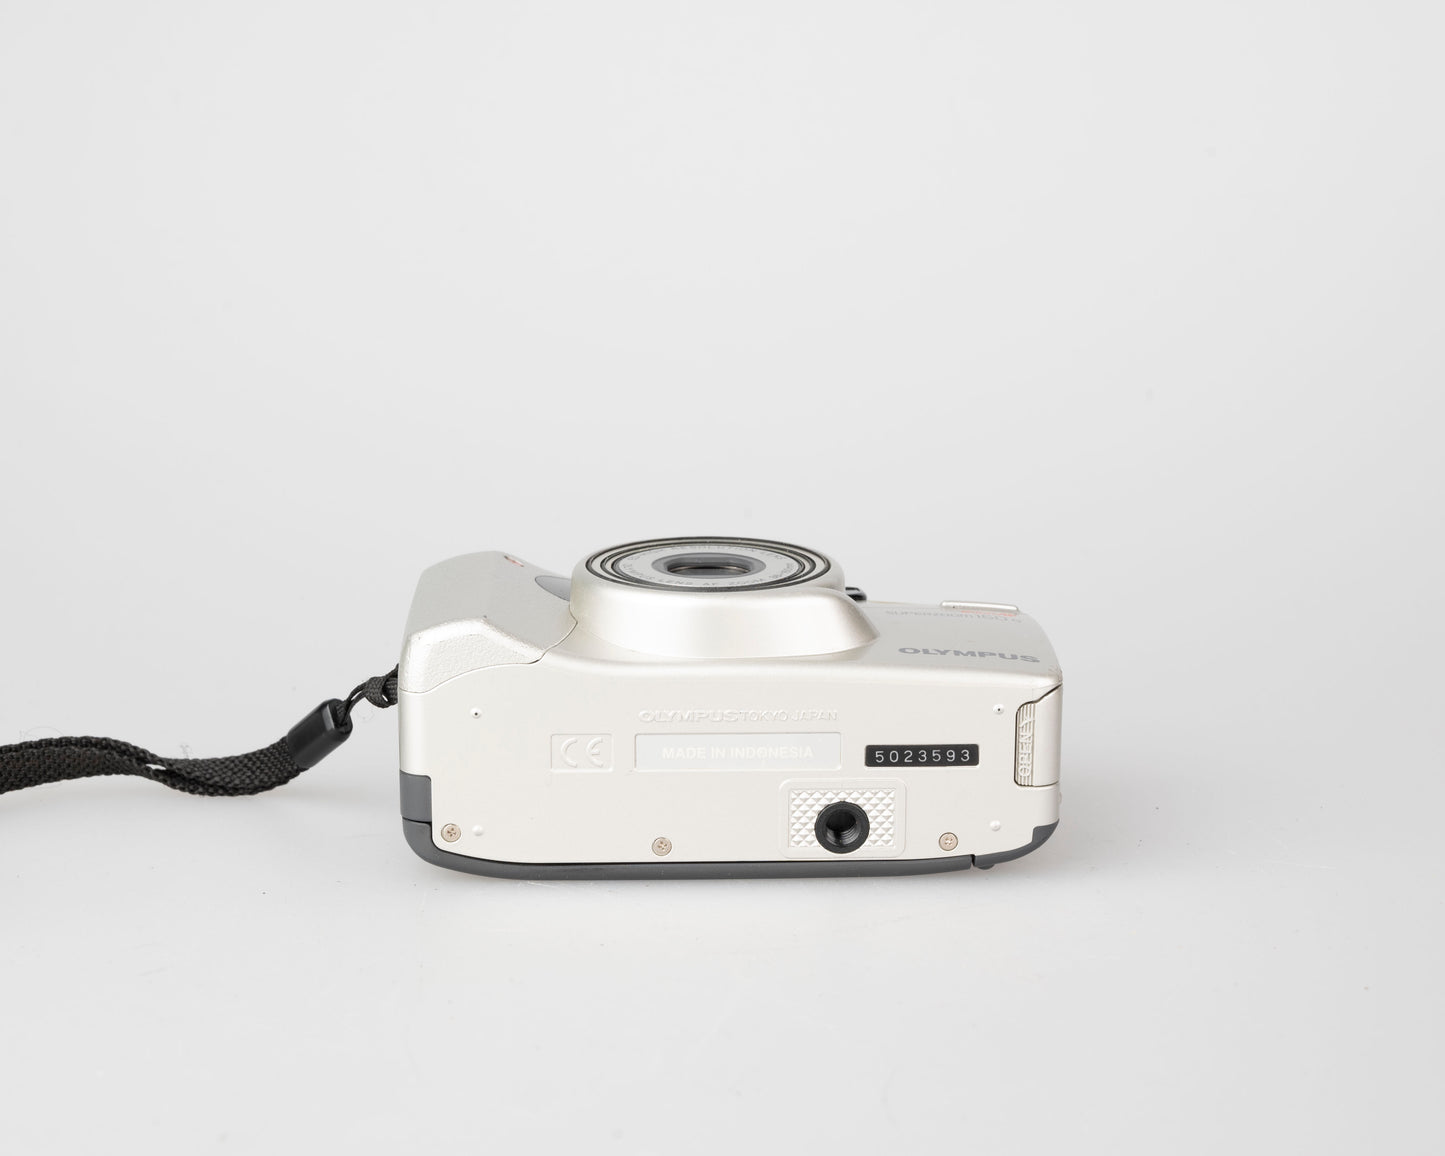 Olympus Superzoom 160G 35mm camera w/ case (serial 5023593)